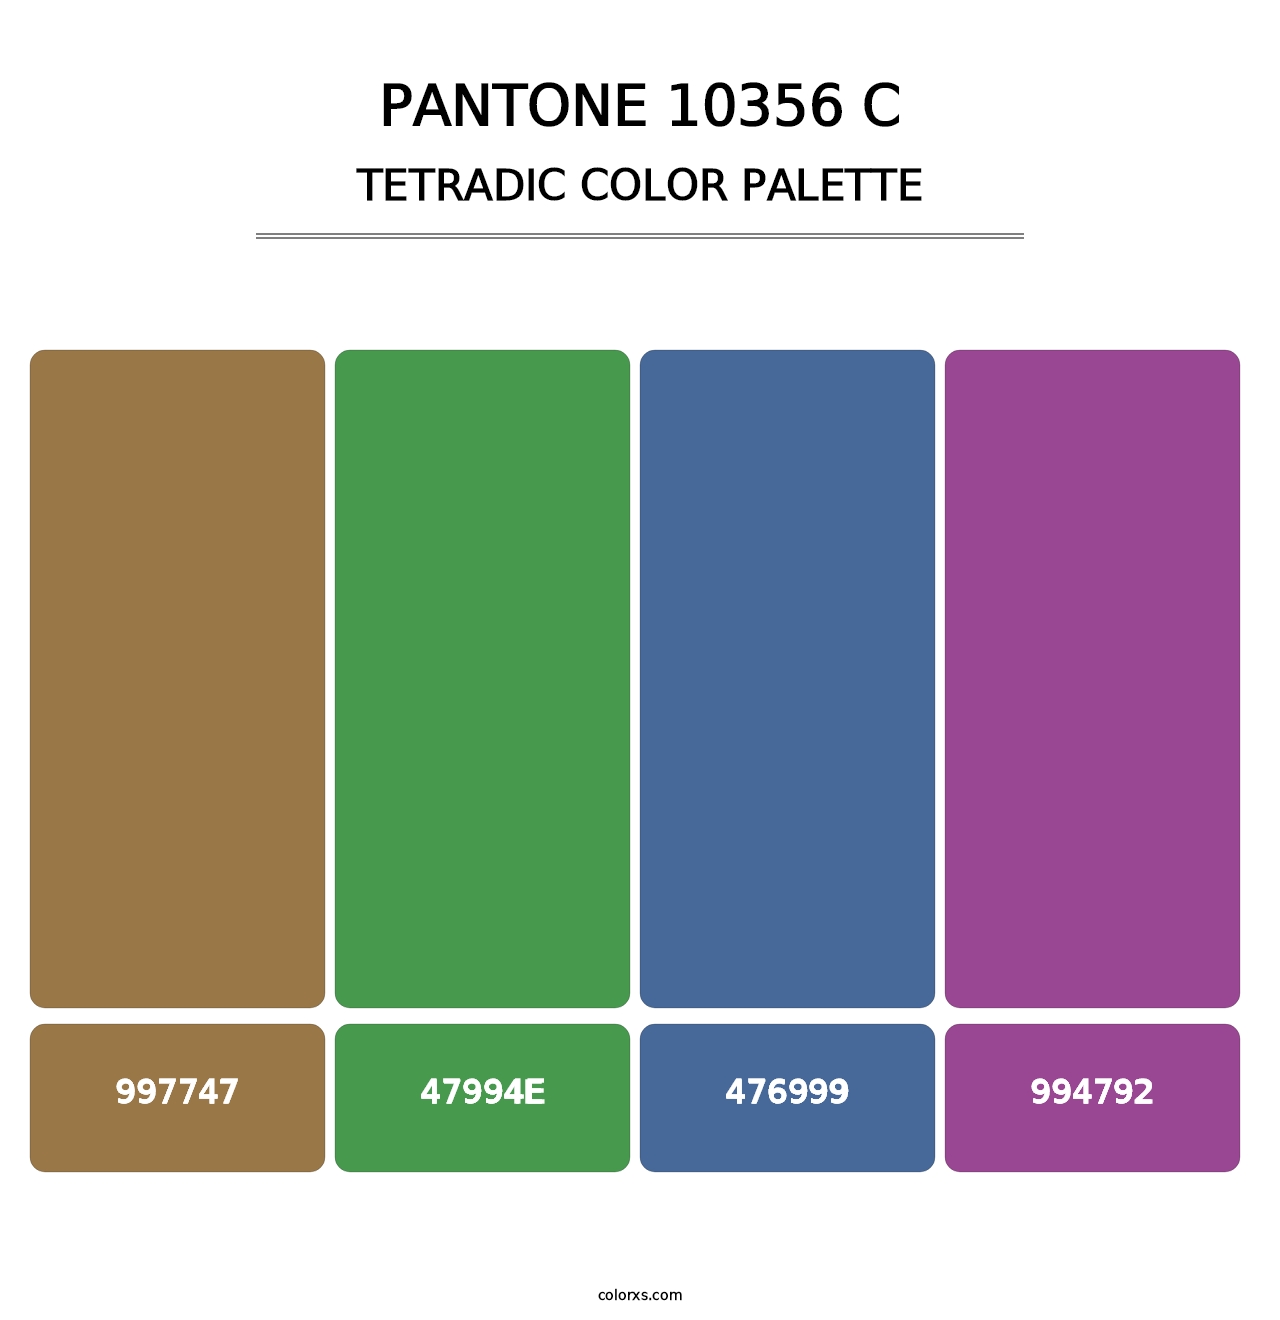 PANTONE 10356 C - Tetradic Color Palette